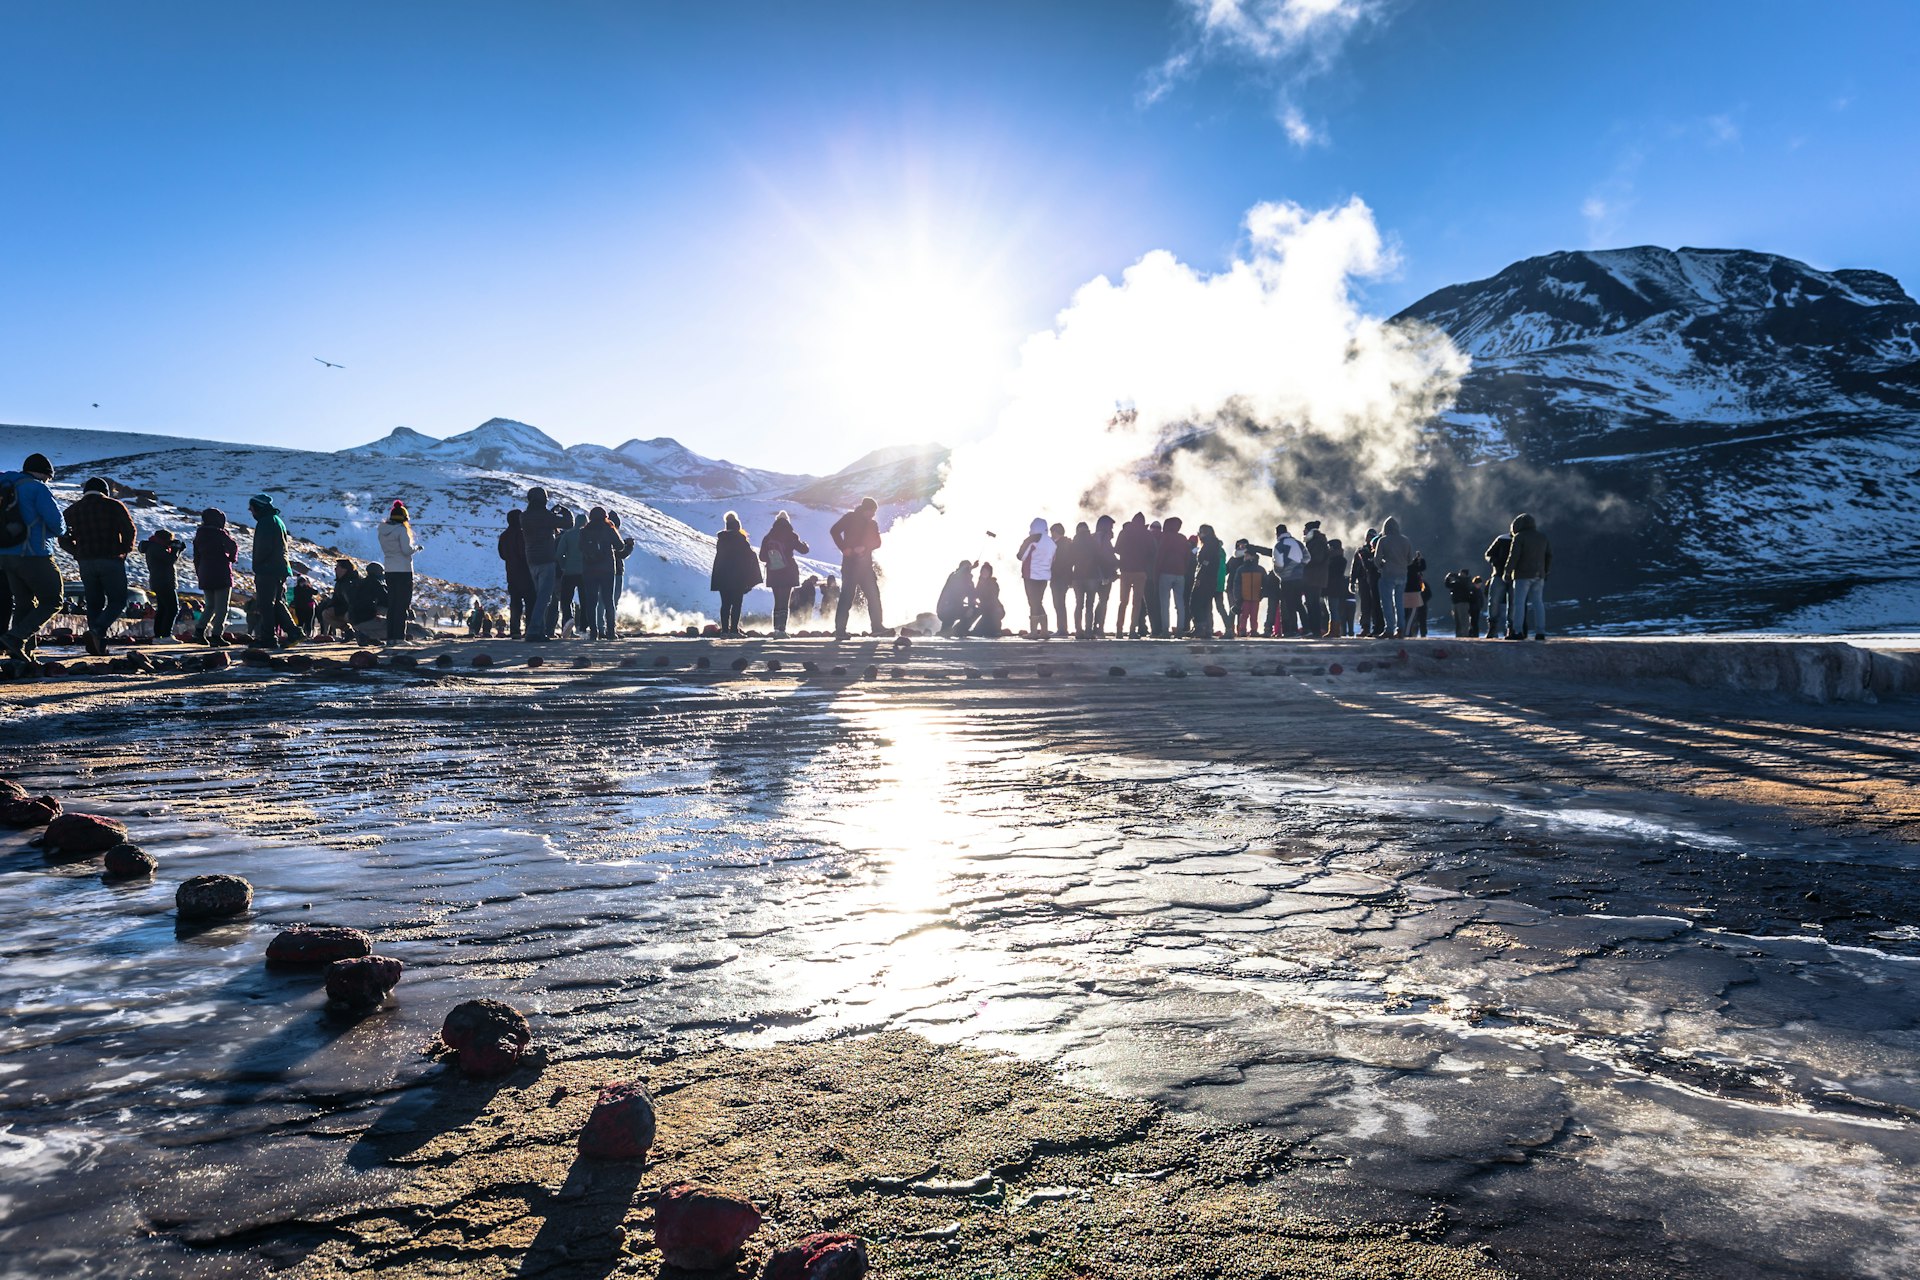 People surround the El Tatio geysers in the Atacama Desert